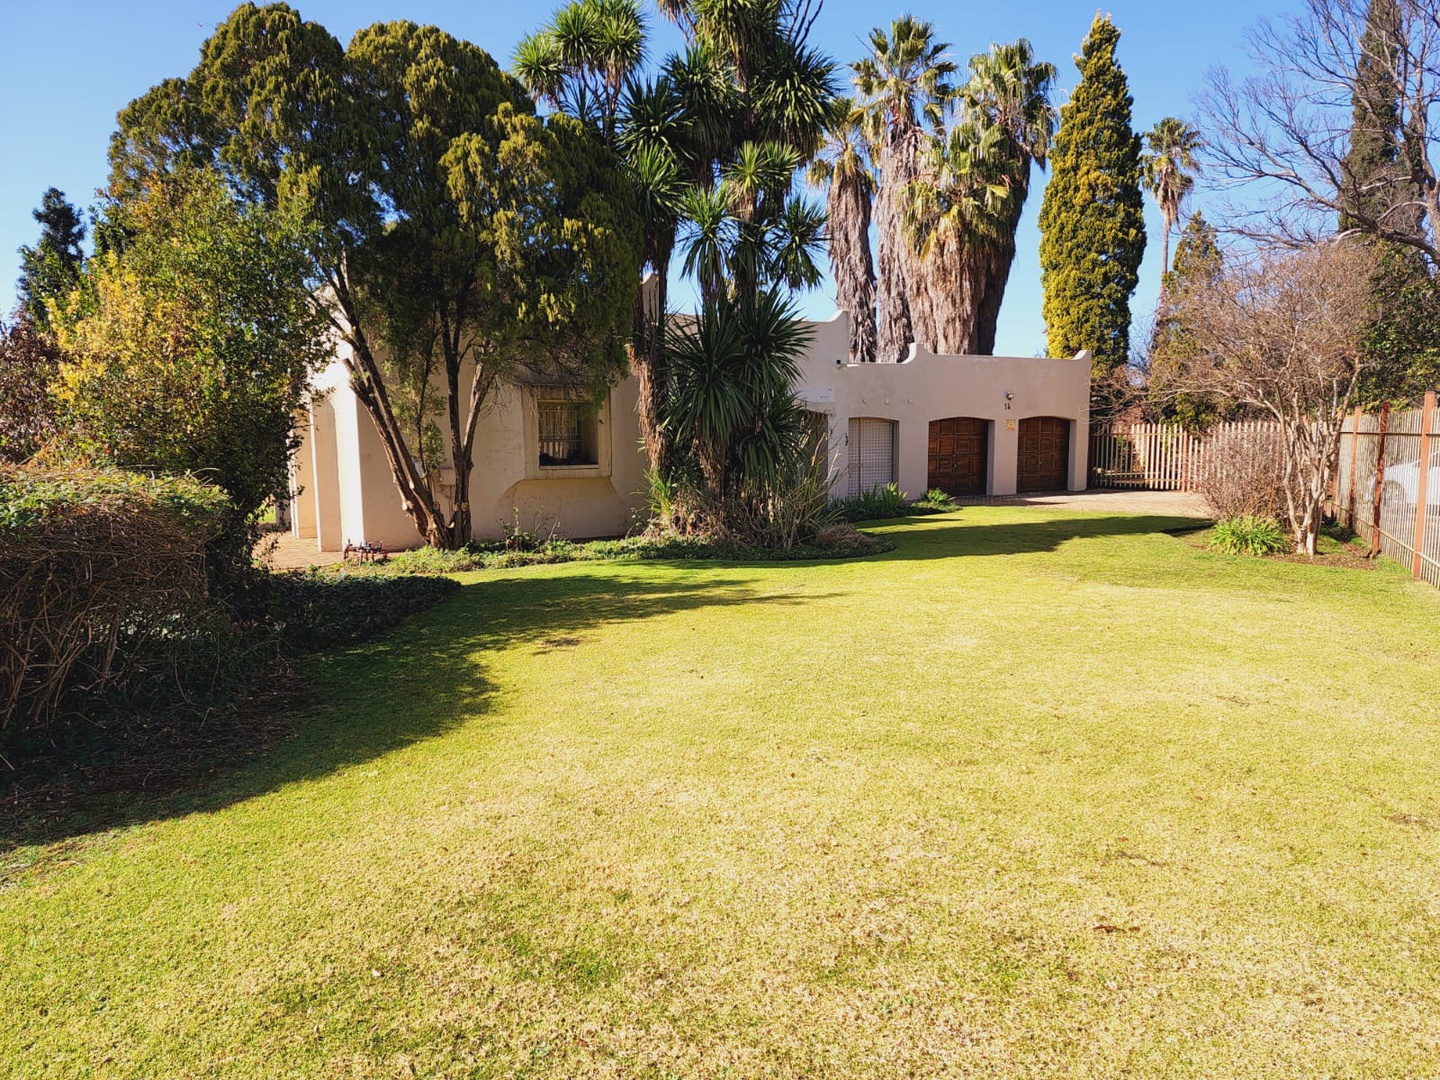 House in Potchefstroom Central - Garden